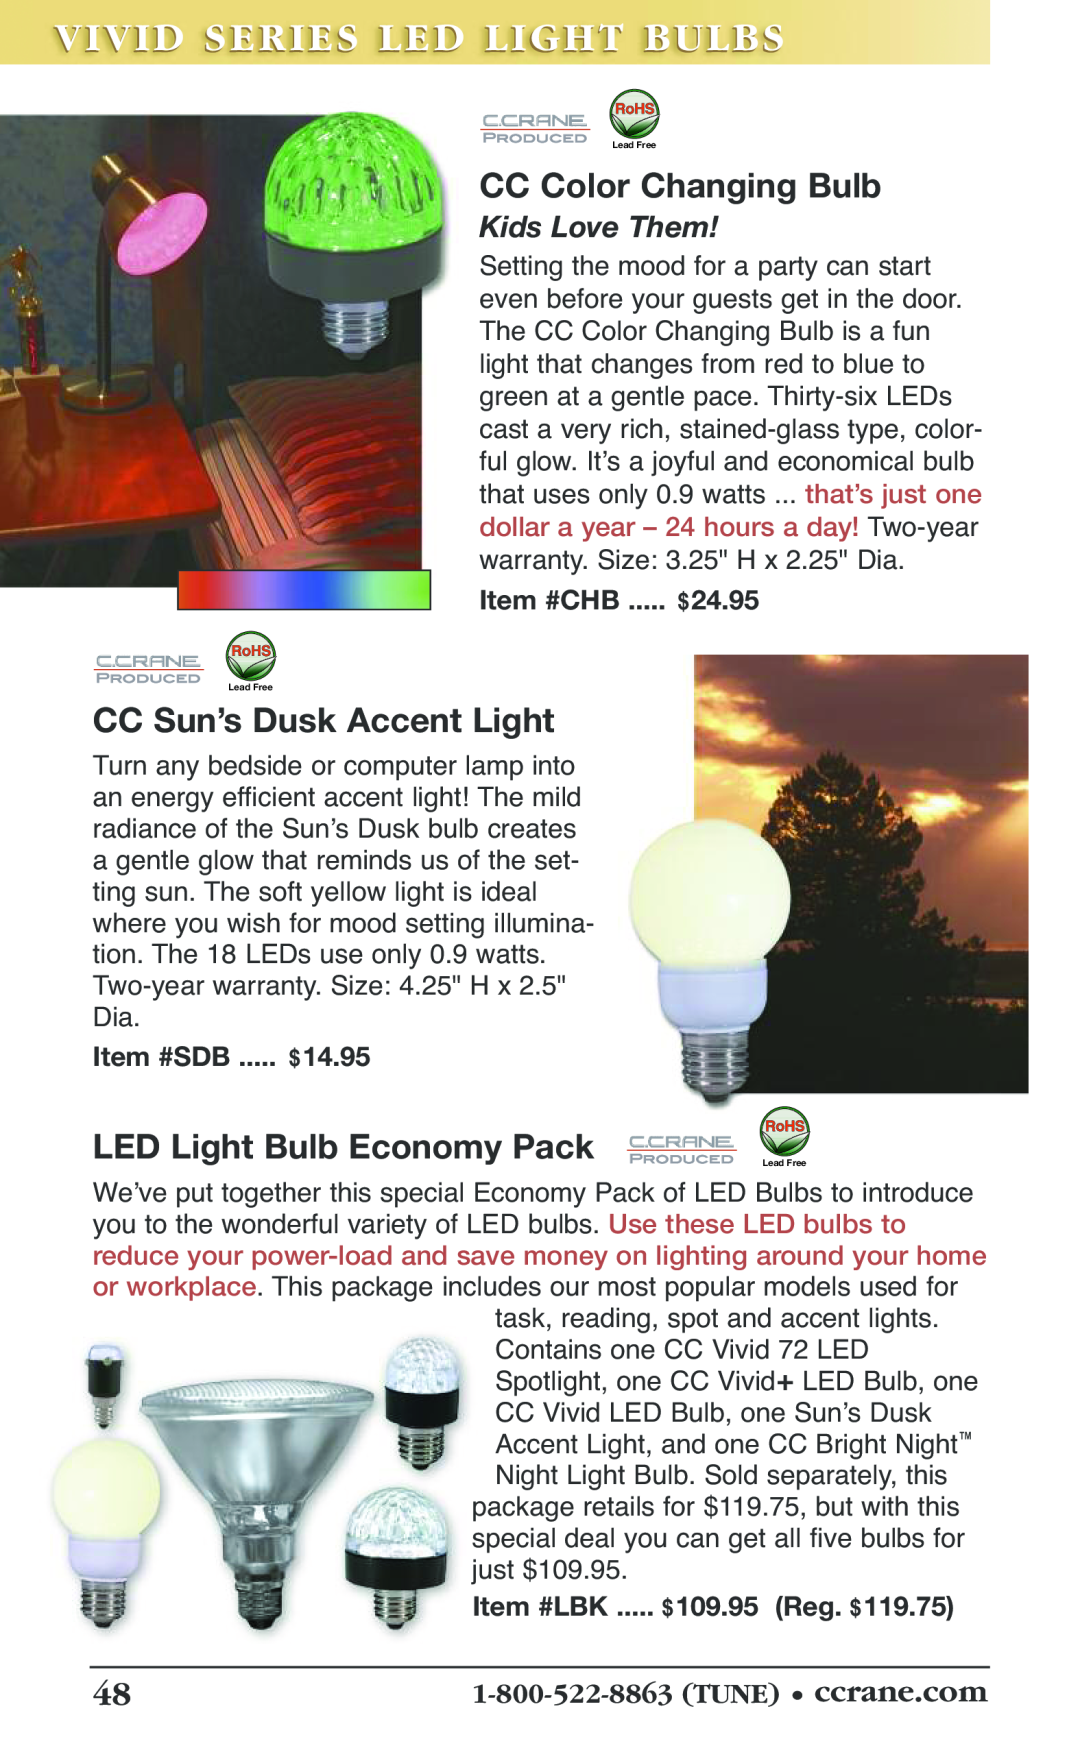 C. Crane 19f manual Vi Vid Seriess Led Lighht Bulbslbs, CC Color Changing Bulb, CC Sun’s Dusk Accent Light, Reg. $119.75 